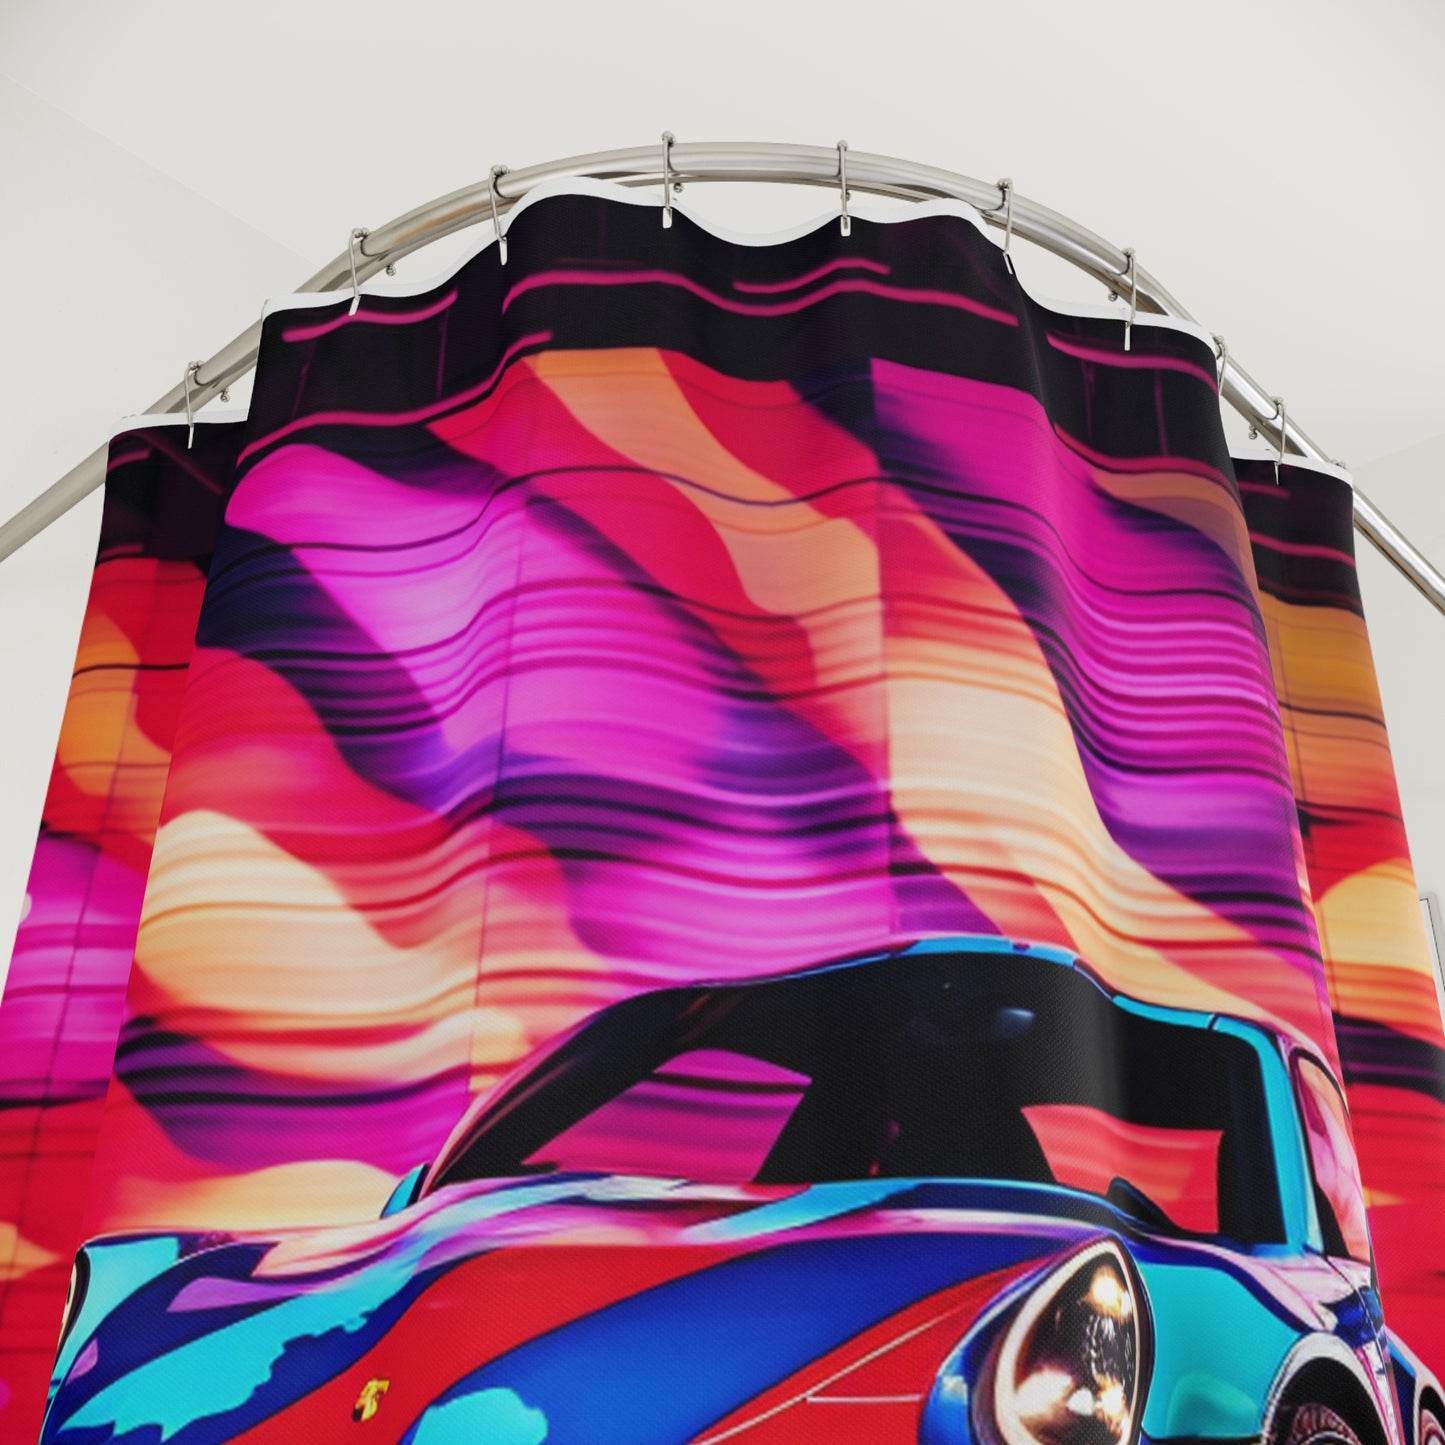 Polyester Shower Curtain Macro American Flag Porsche 1